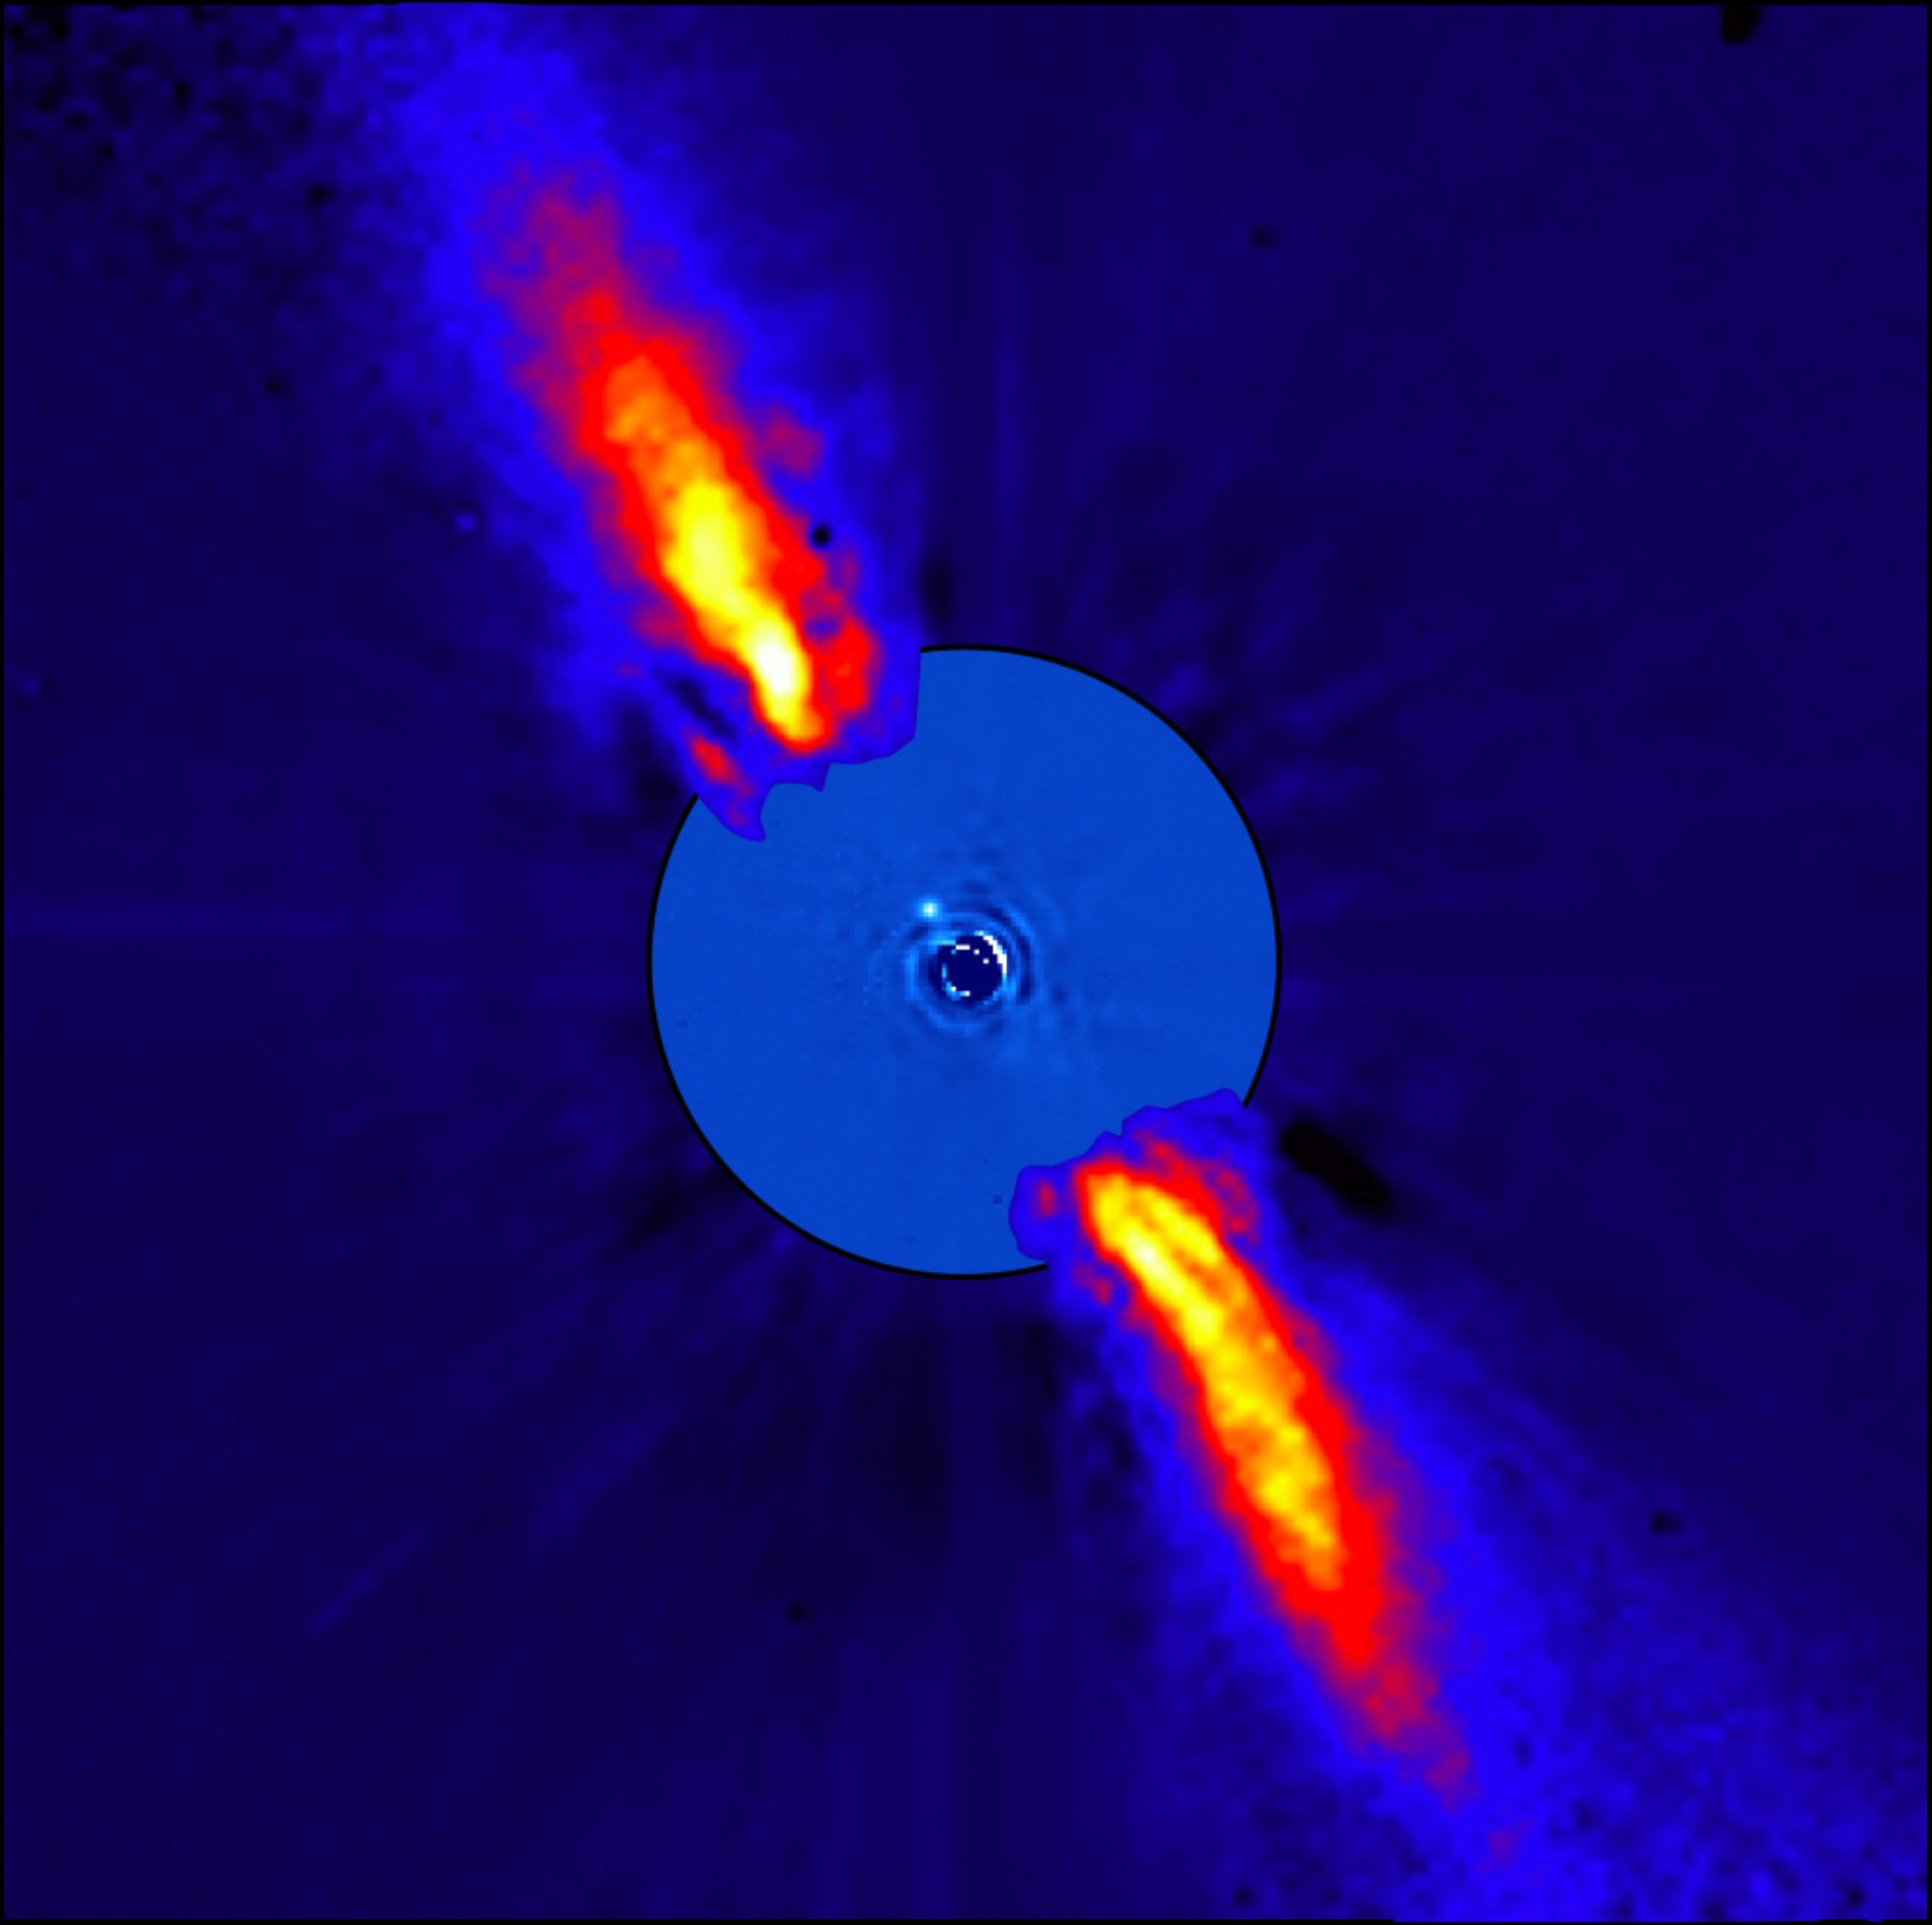 Astronomers direct imaging Beta Pictoris star